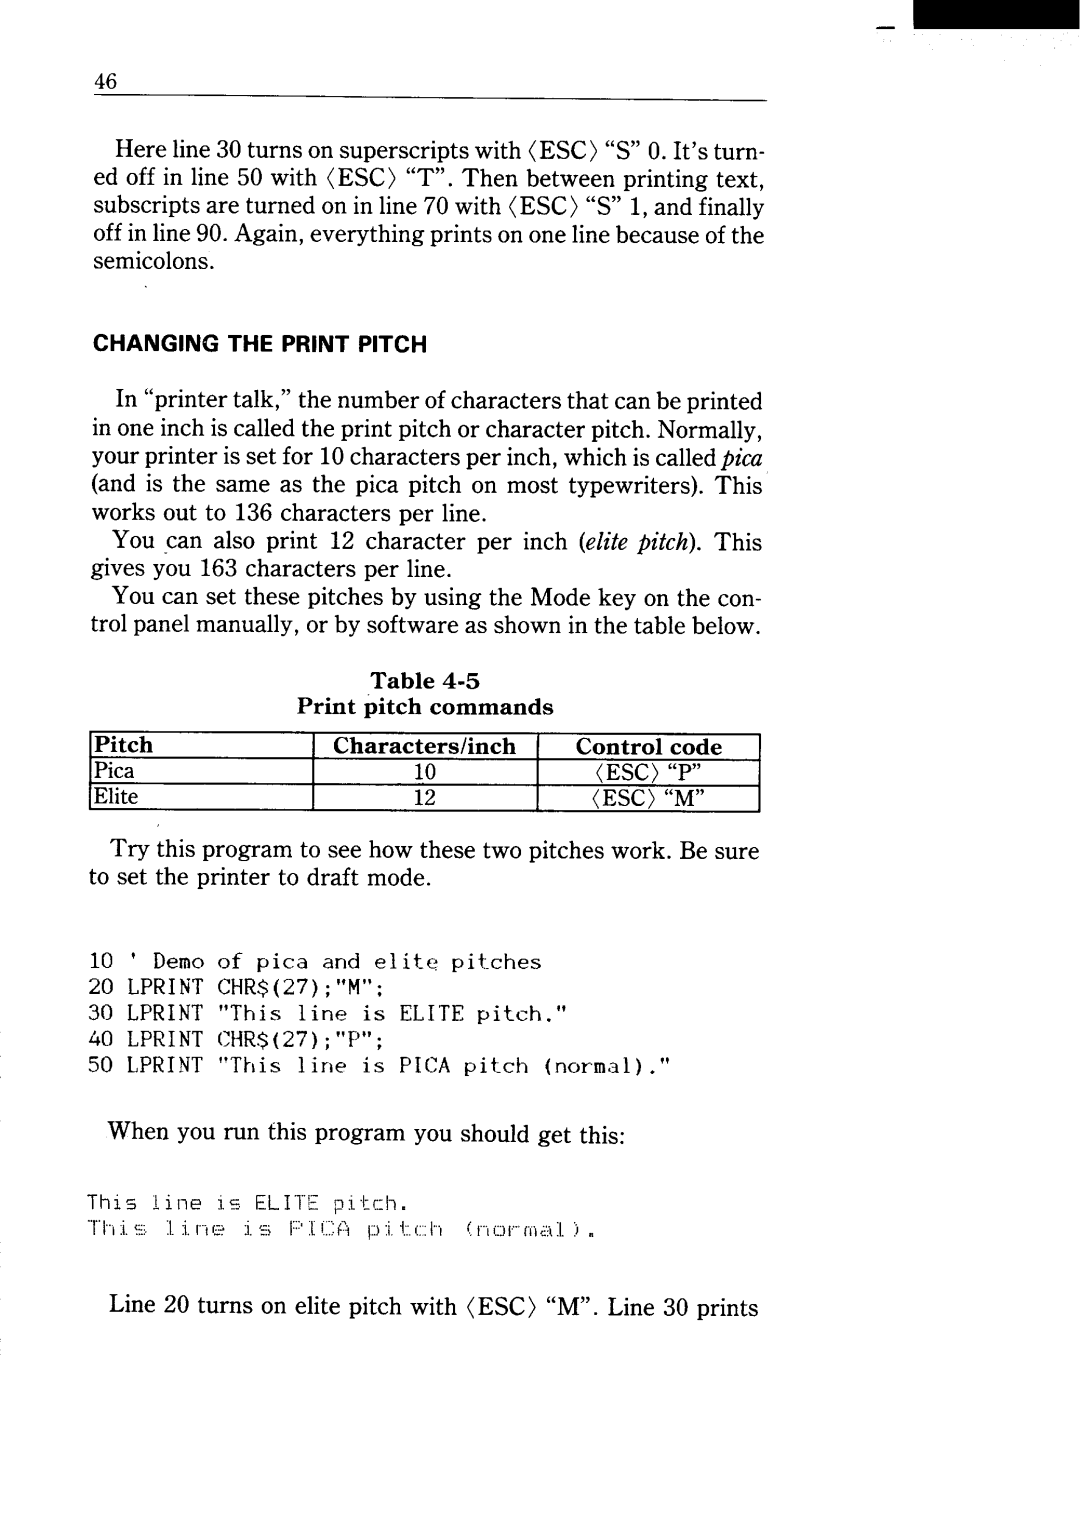 Star Micronics NX-15 Changing The Print Pitch, Th 1s 11 ne is. EL 11“”Ep ~ trh, ‘“l”l’”i1.s. 1.1,I“”iP i ‘3 1’” l\ pi. t h 